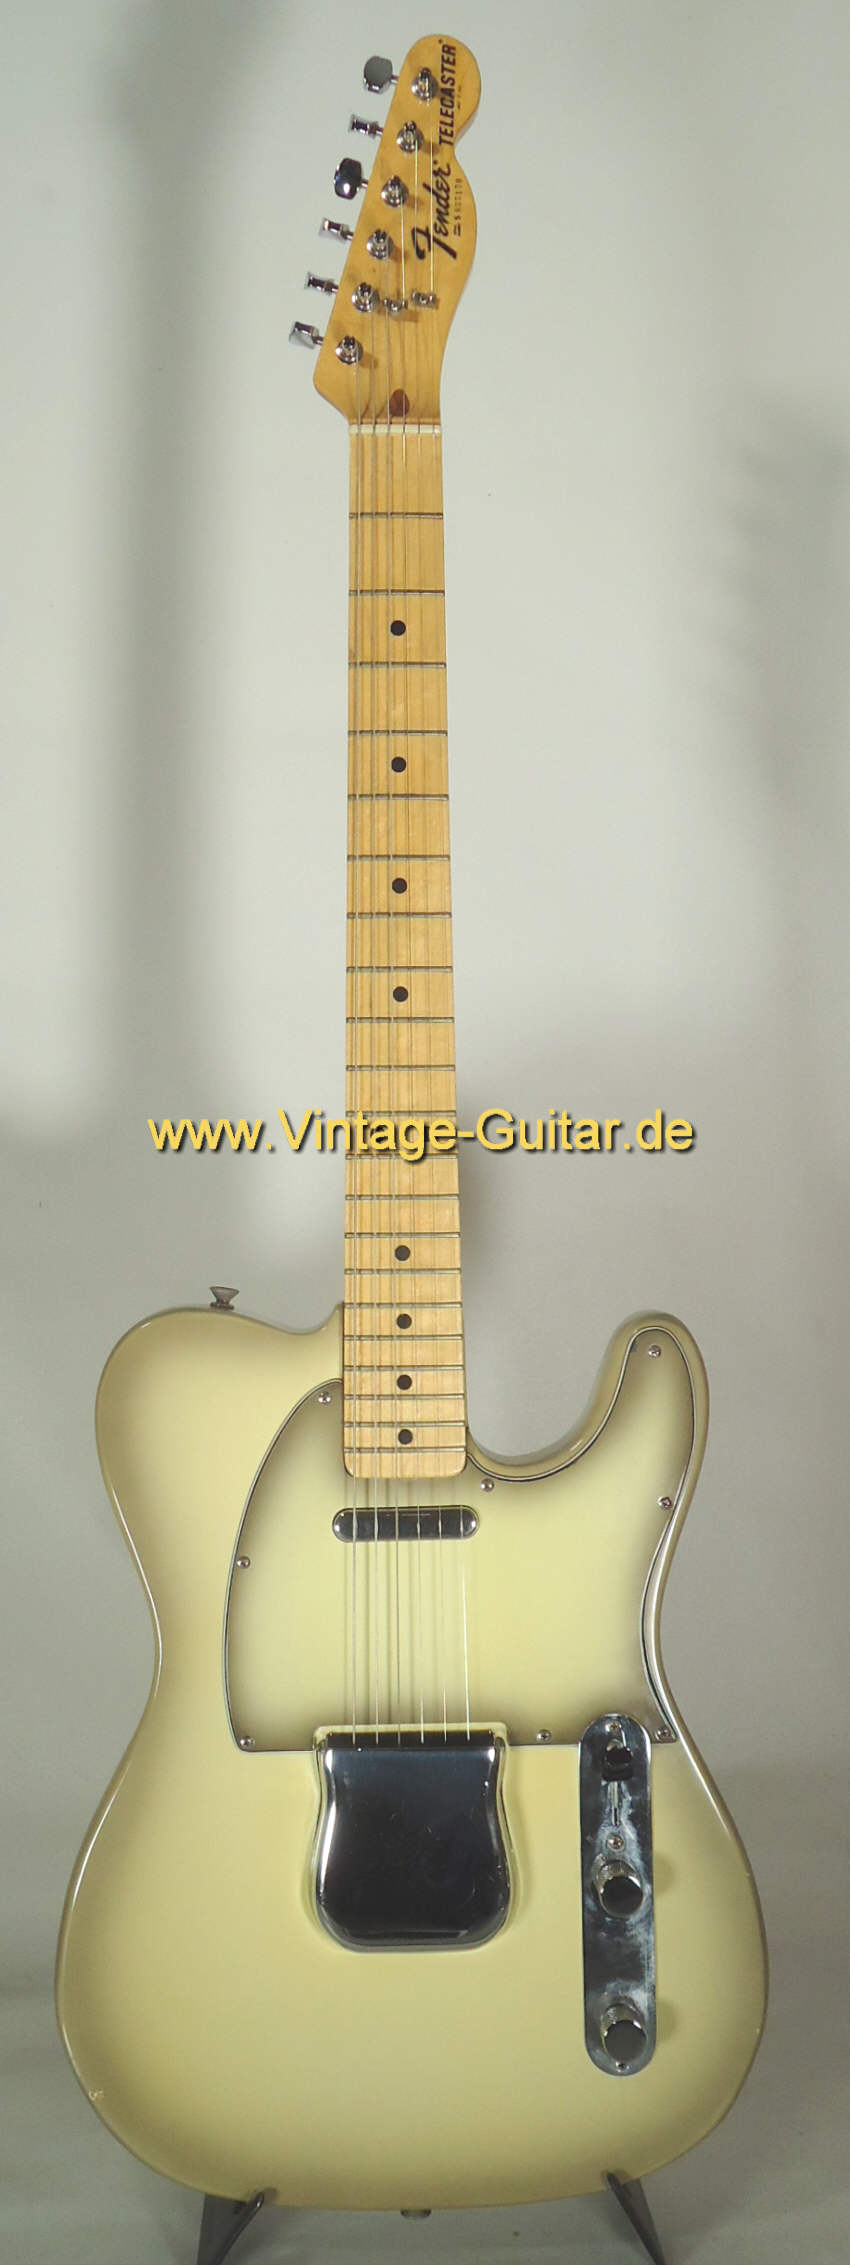 Fender  Telecaster 1978 antigua a.jpg